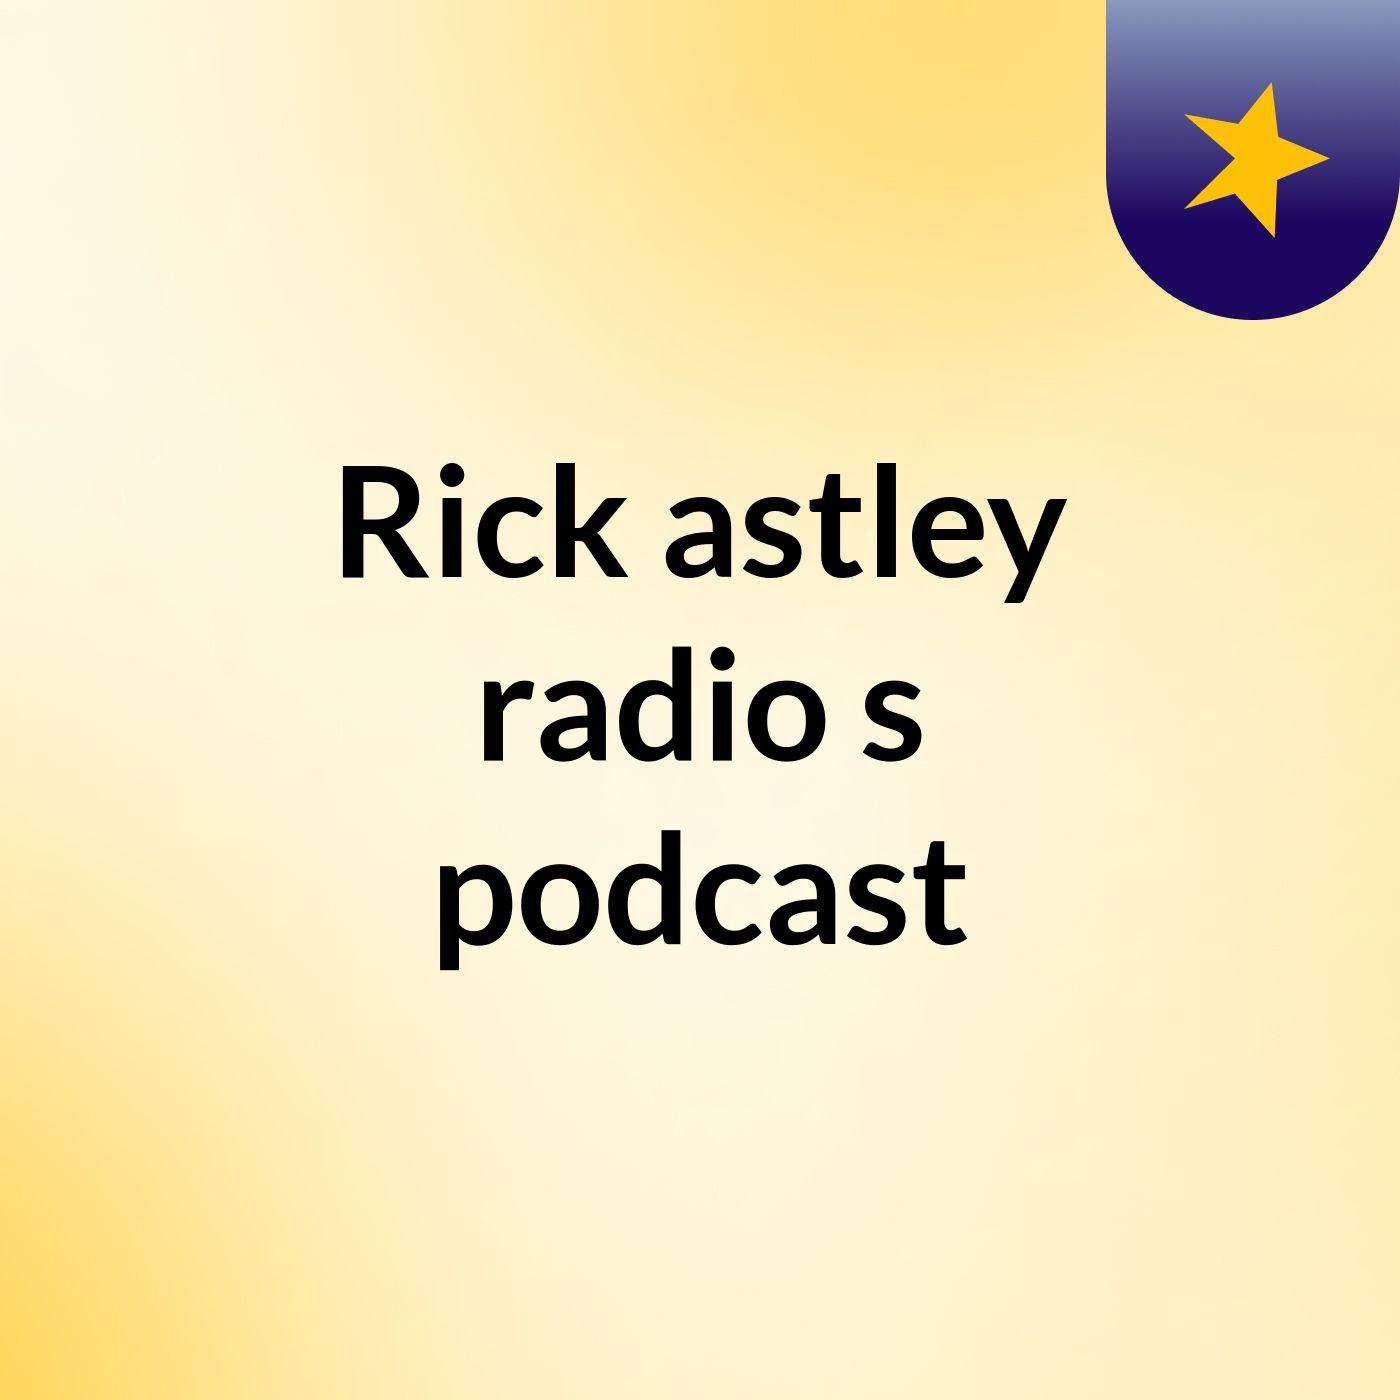 Rick astley radio's podcast